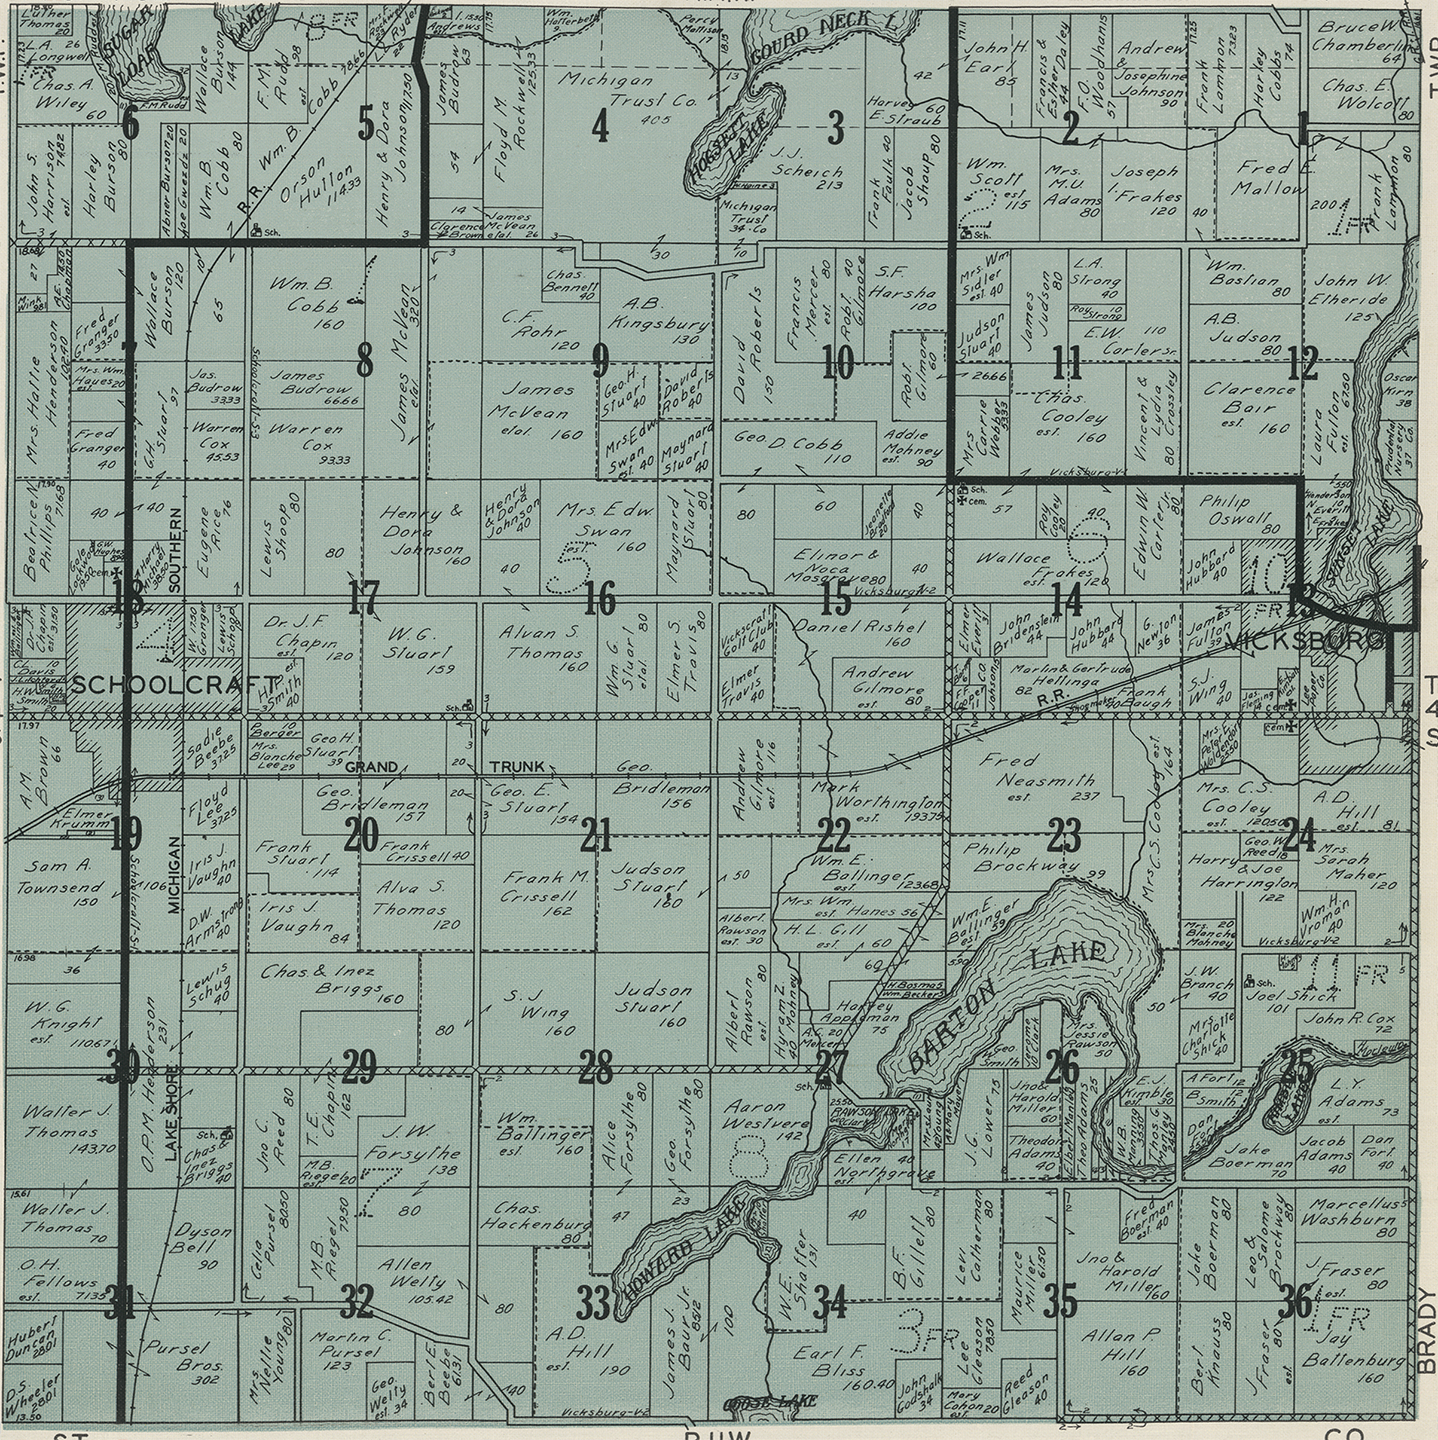 1928 Schoolcraft Township Michigan landownership map